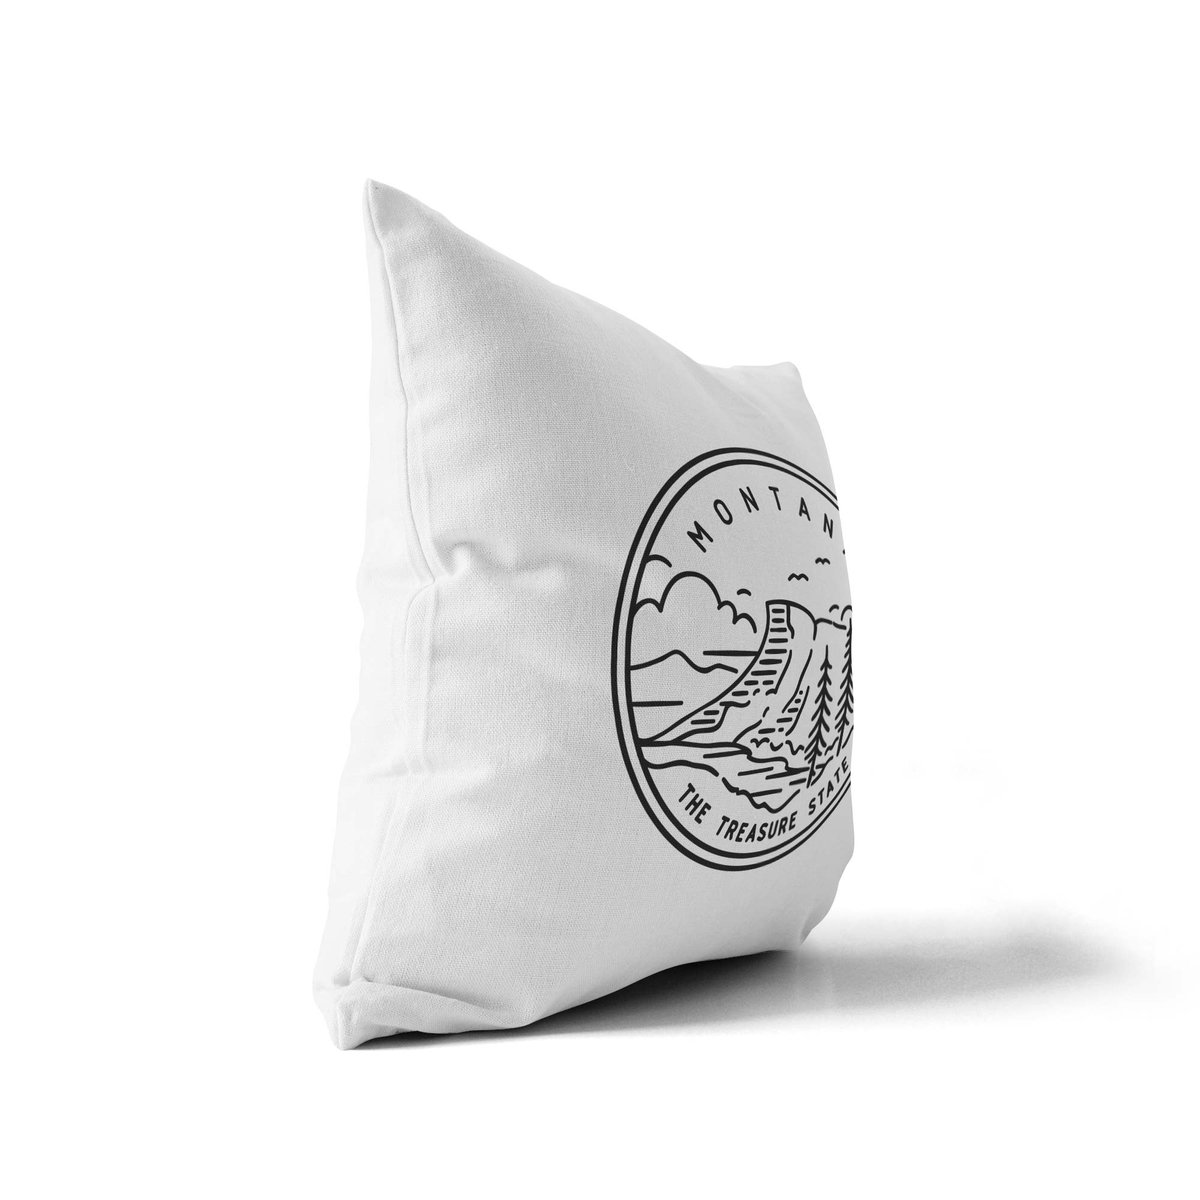 Montana State Crest Throw Pillow